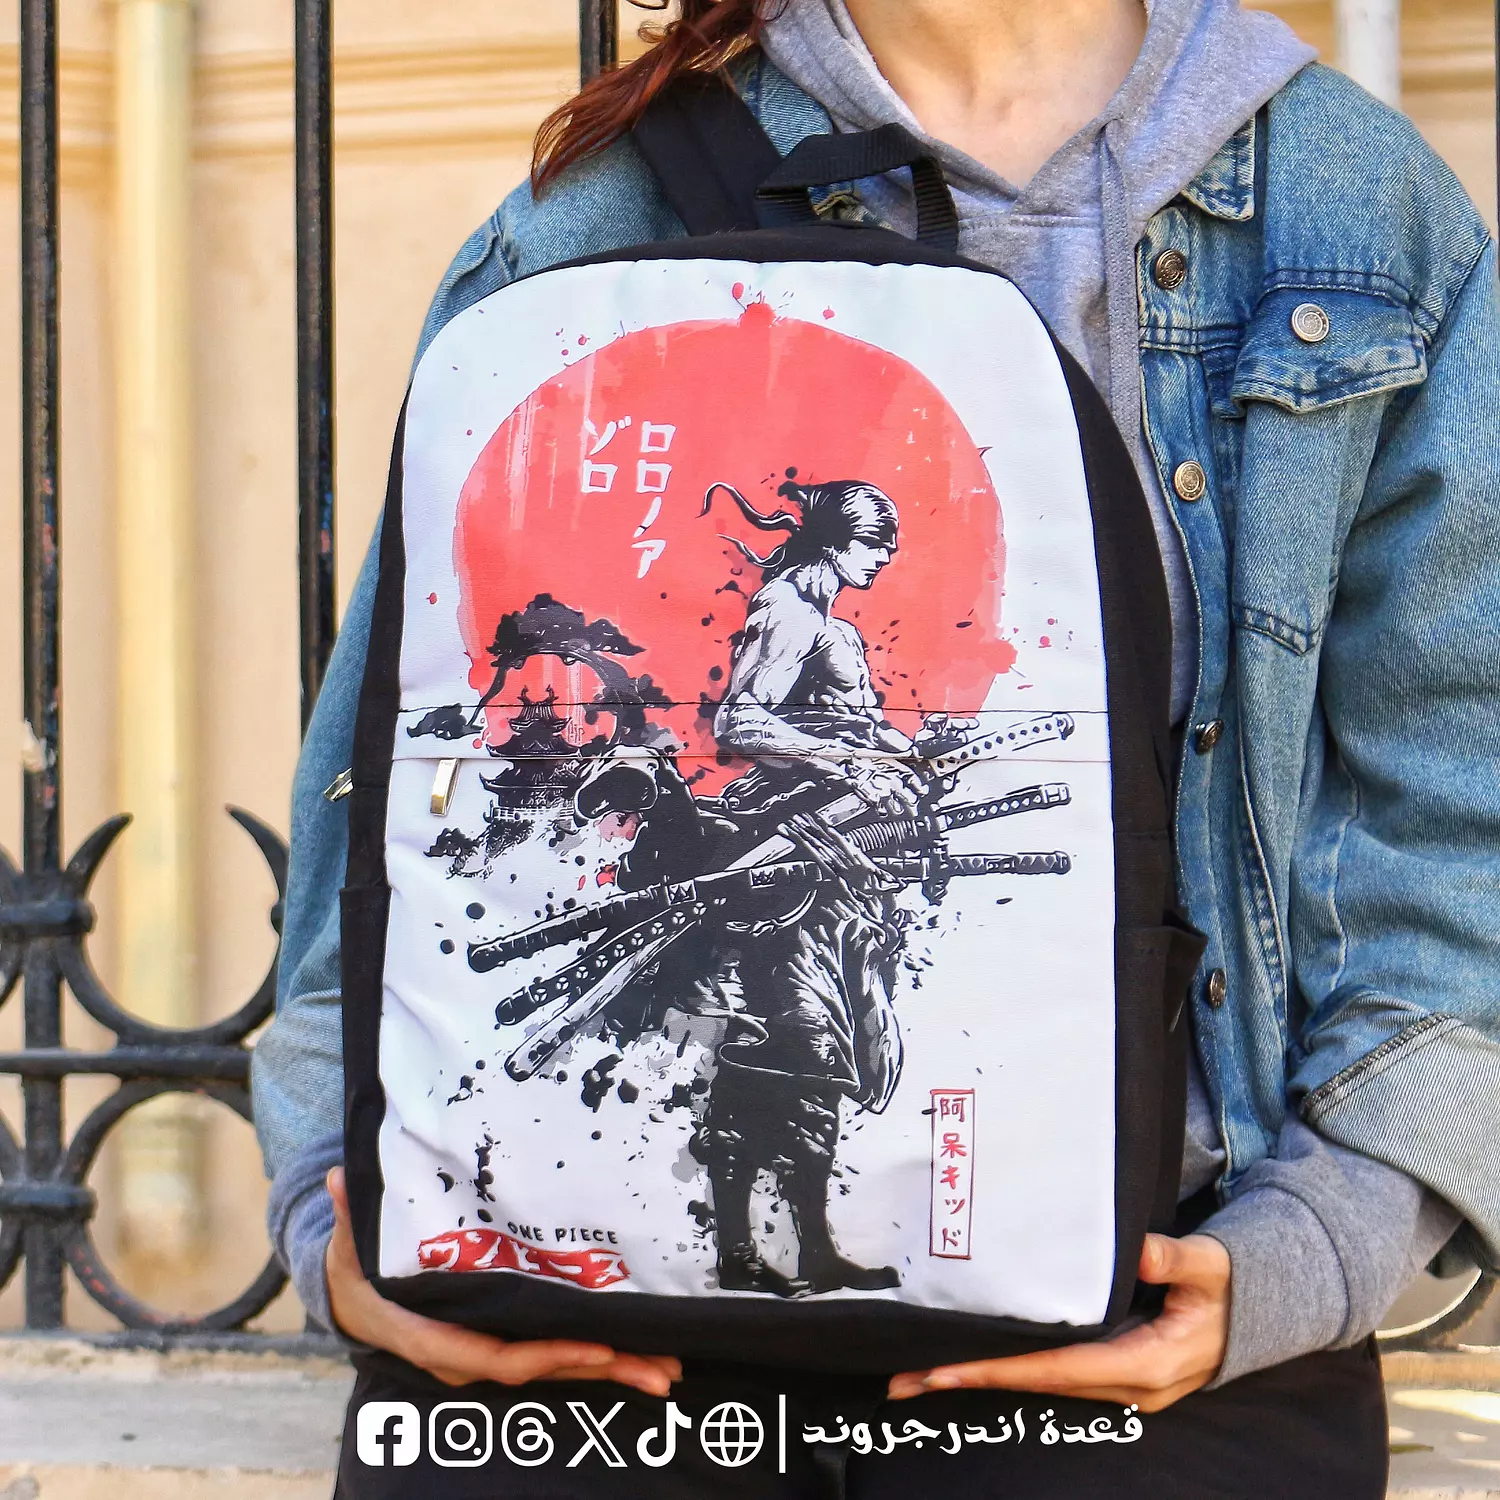 Zoro Samurai Backpack 🎒 hover image